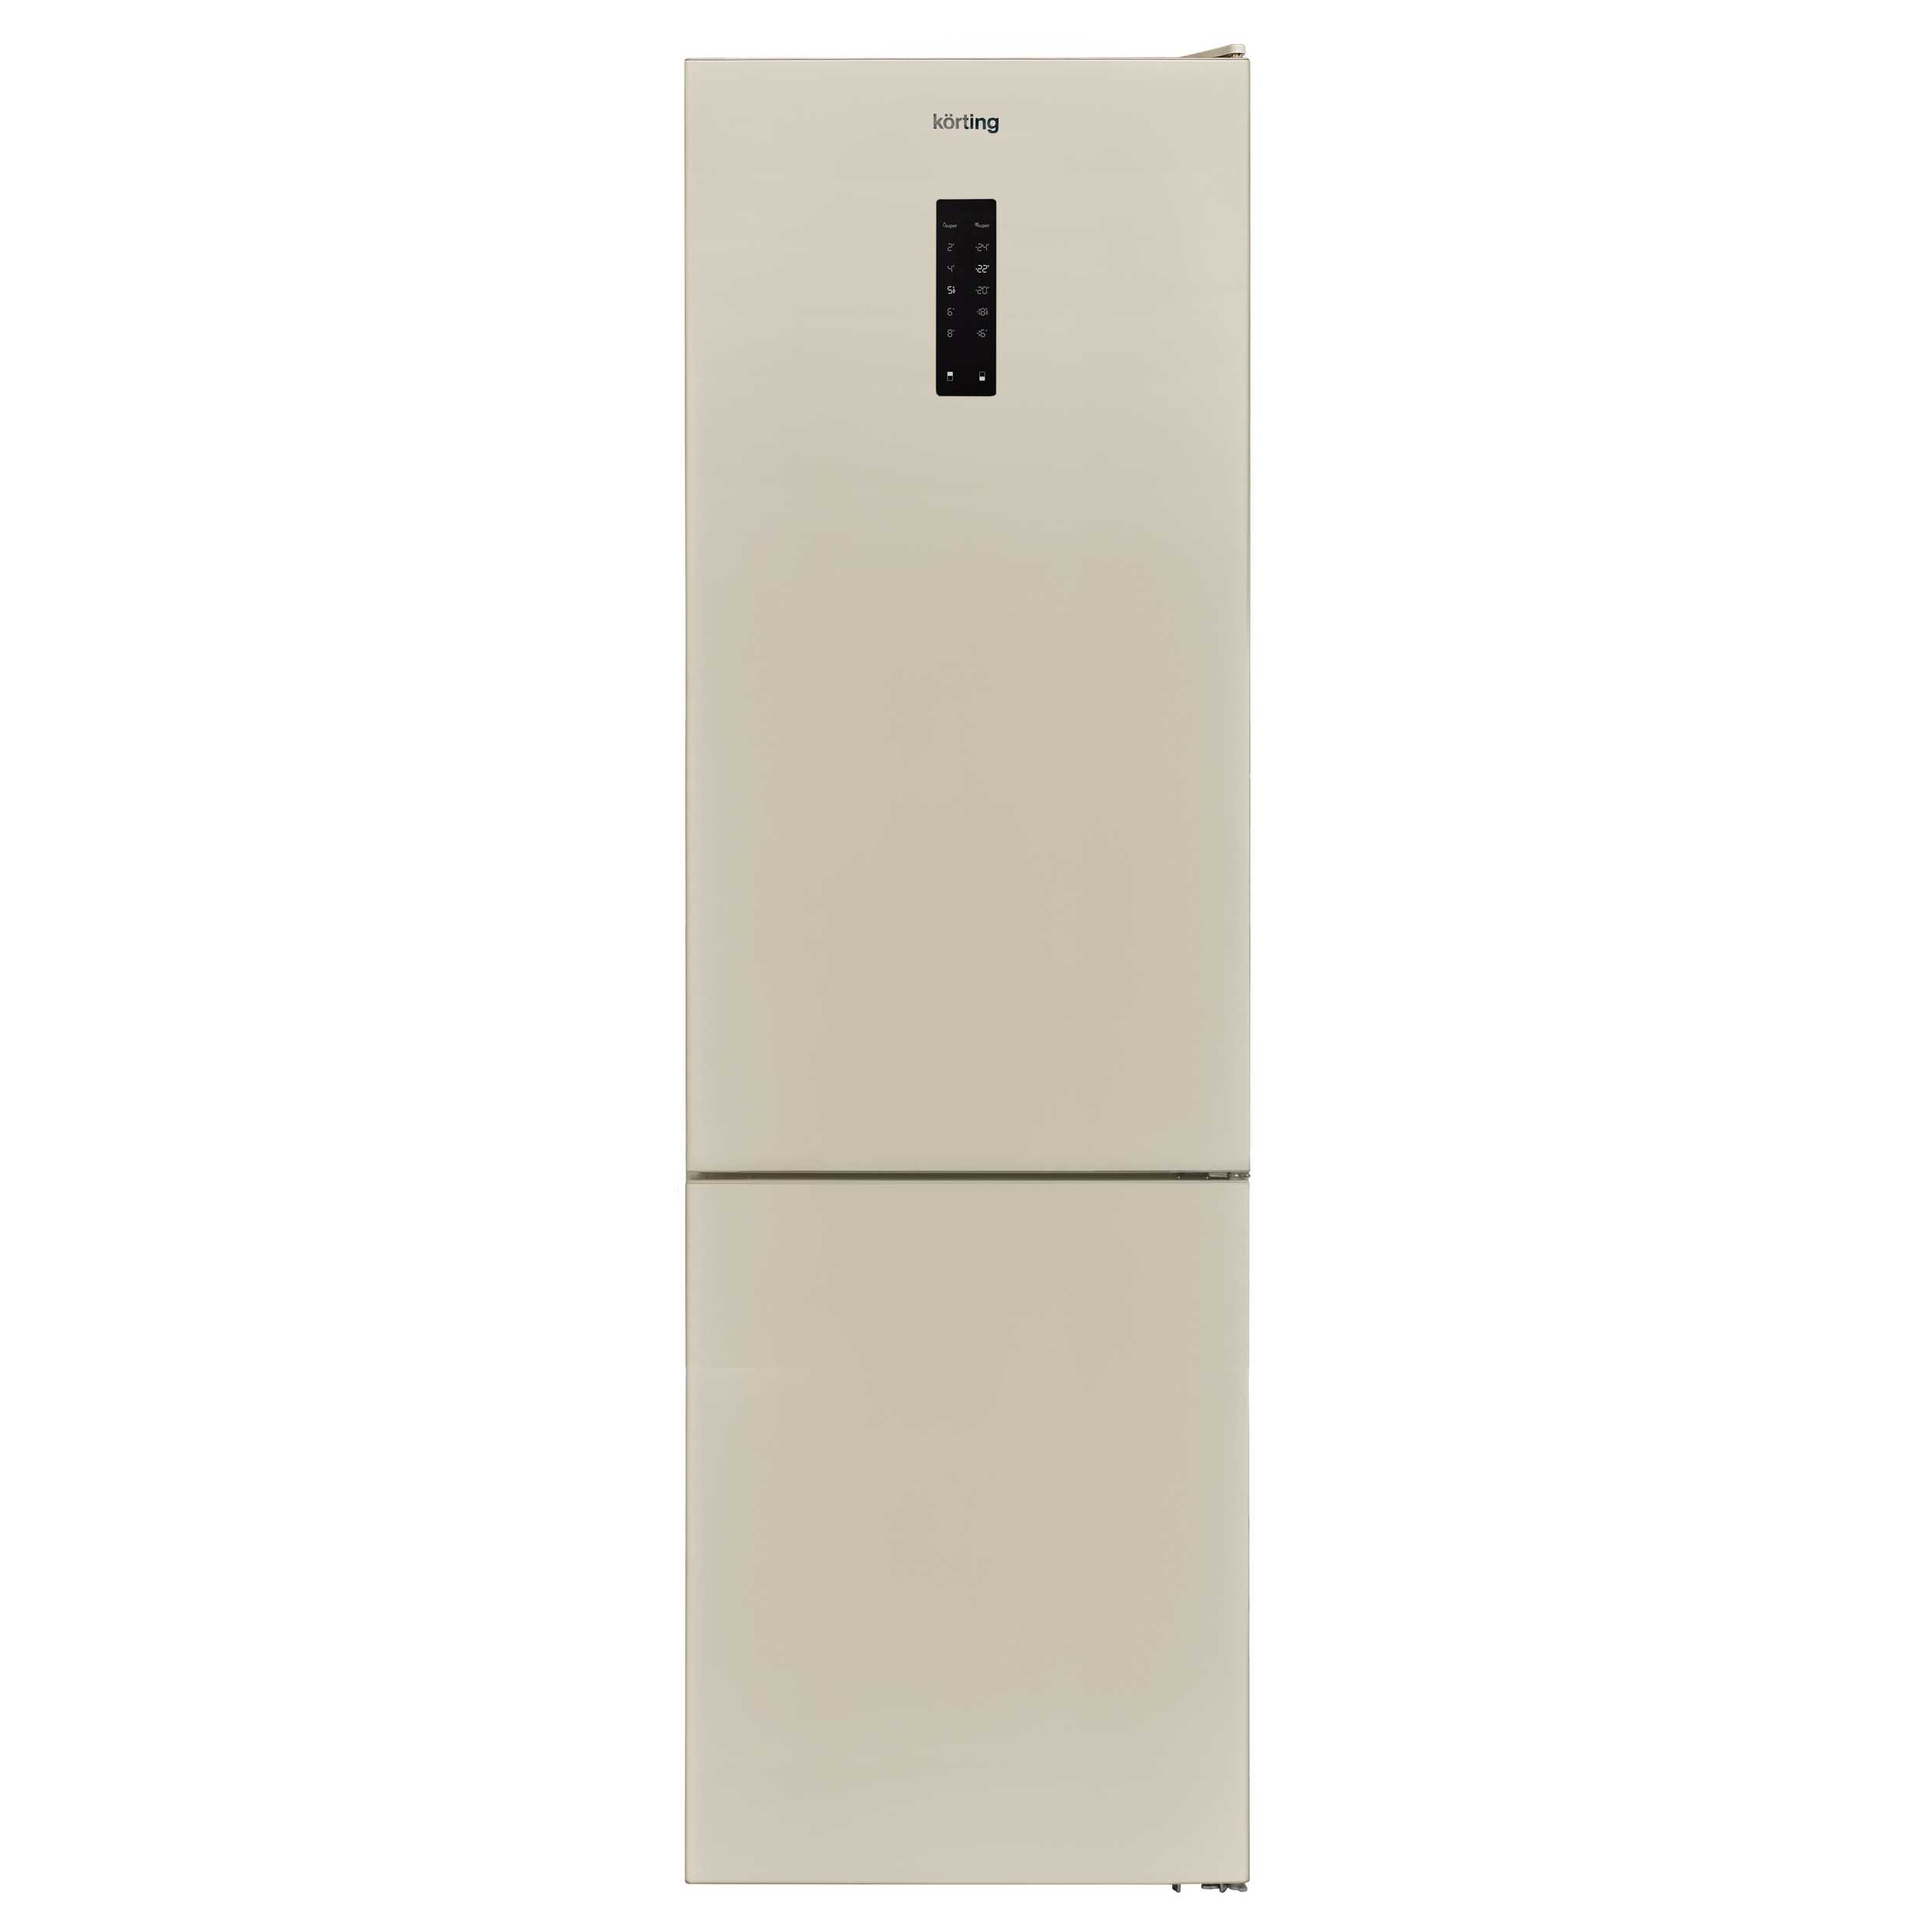 Холодильник Korting KNFC 62010 B бежевый двухкамерный холодильник korting knfc 62010 b